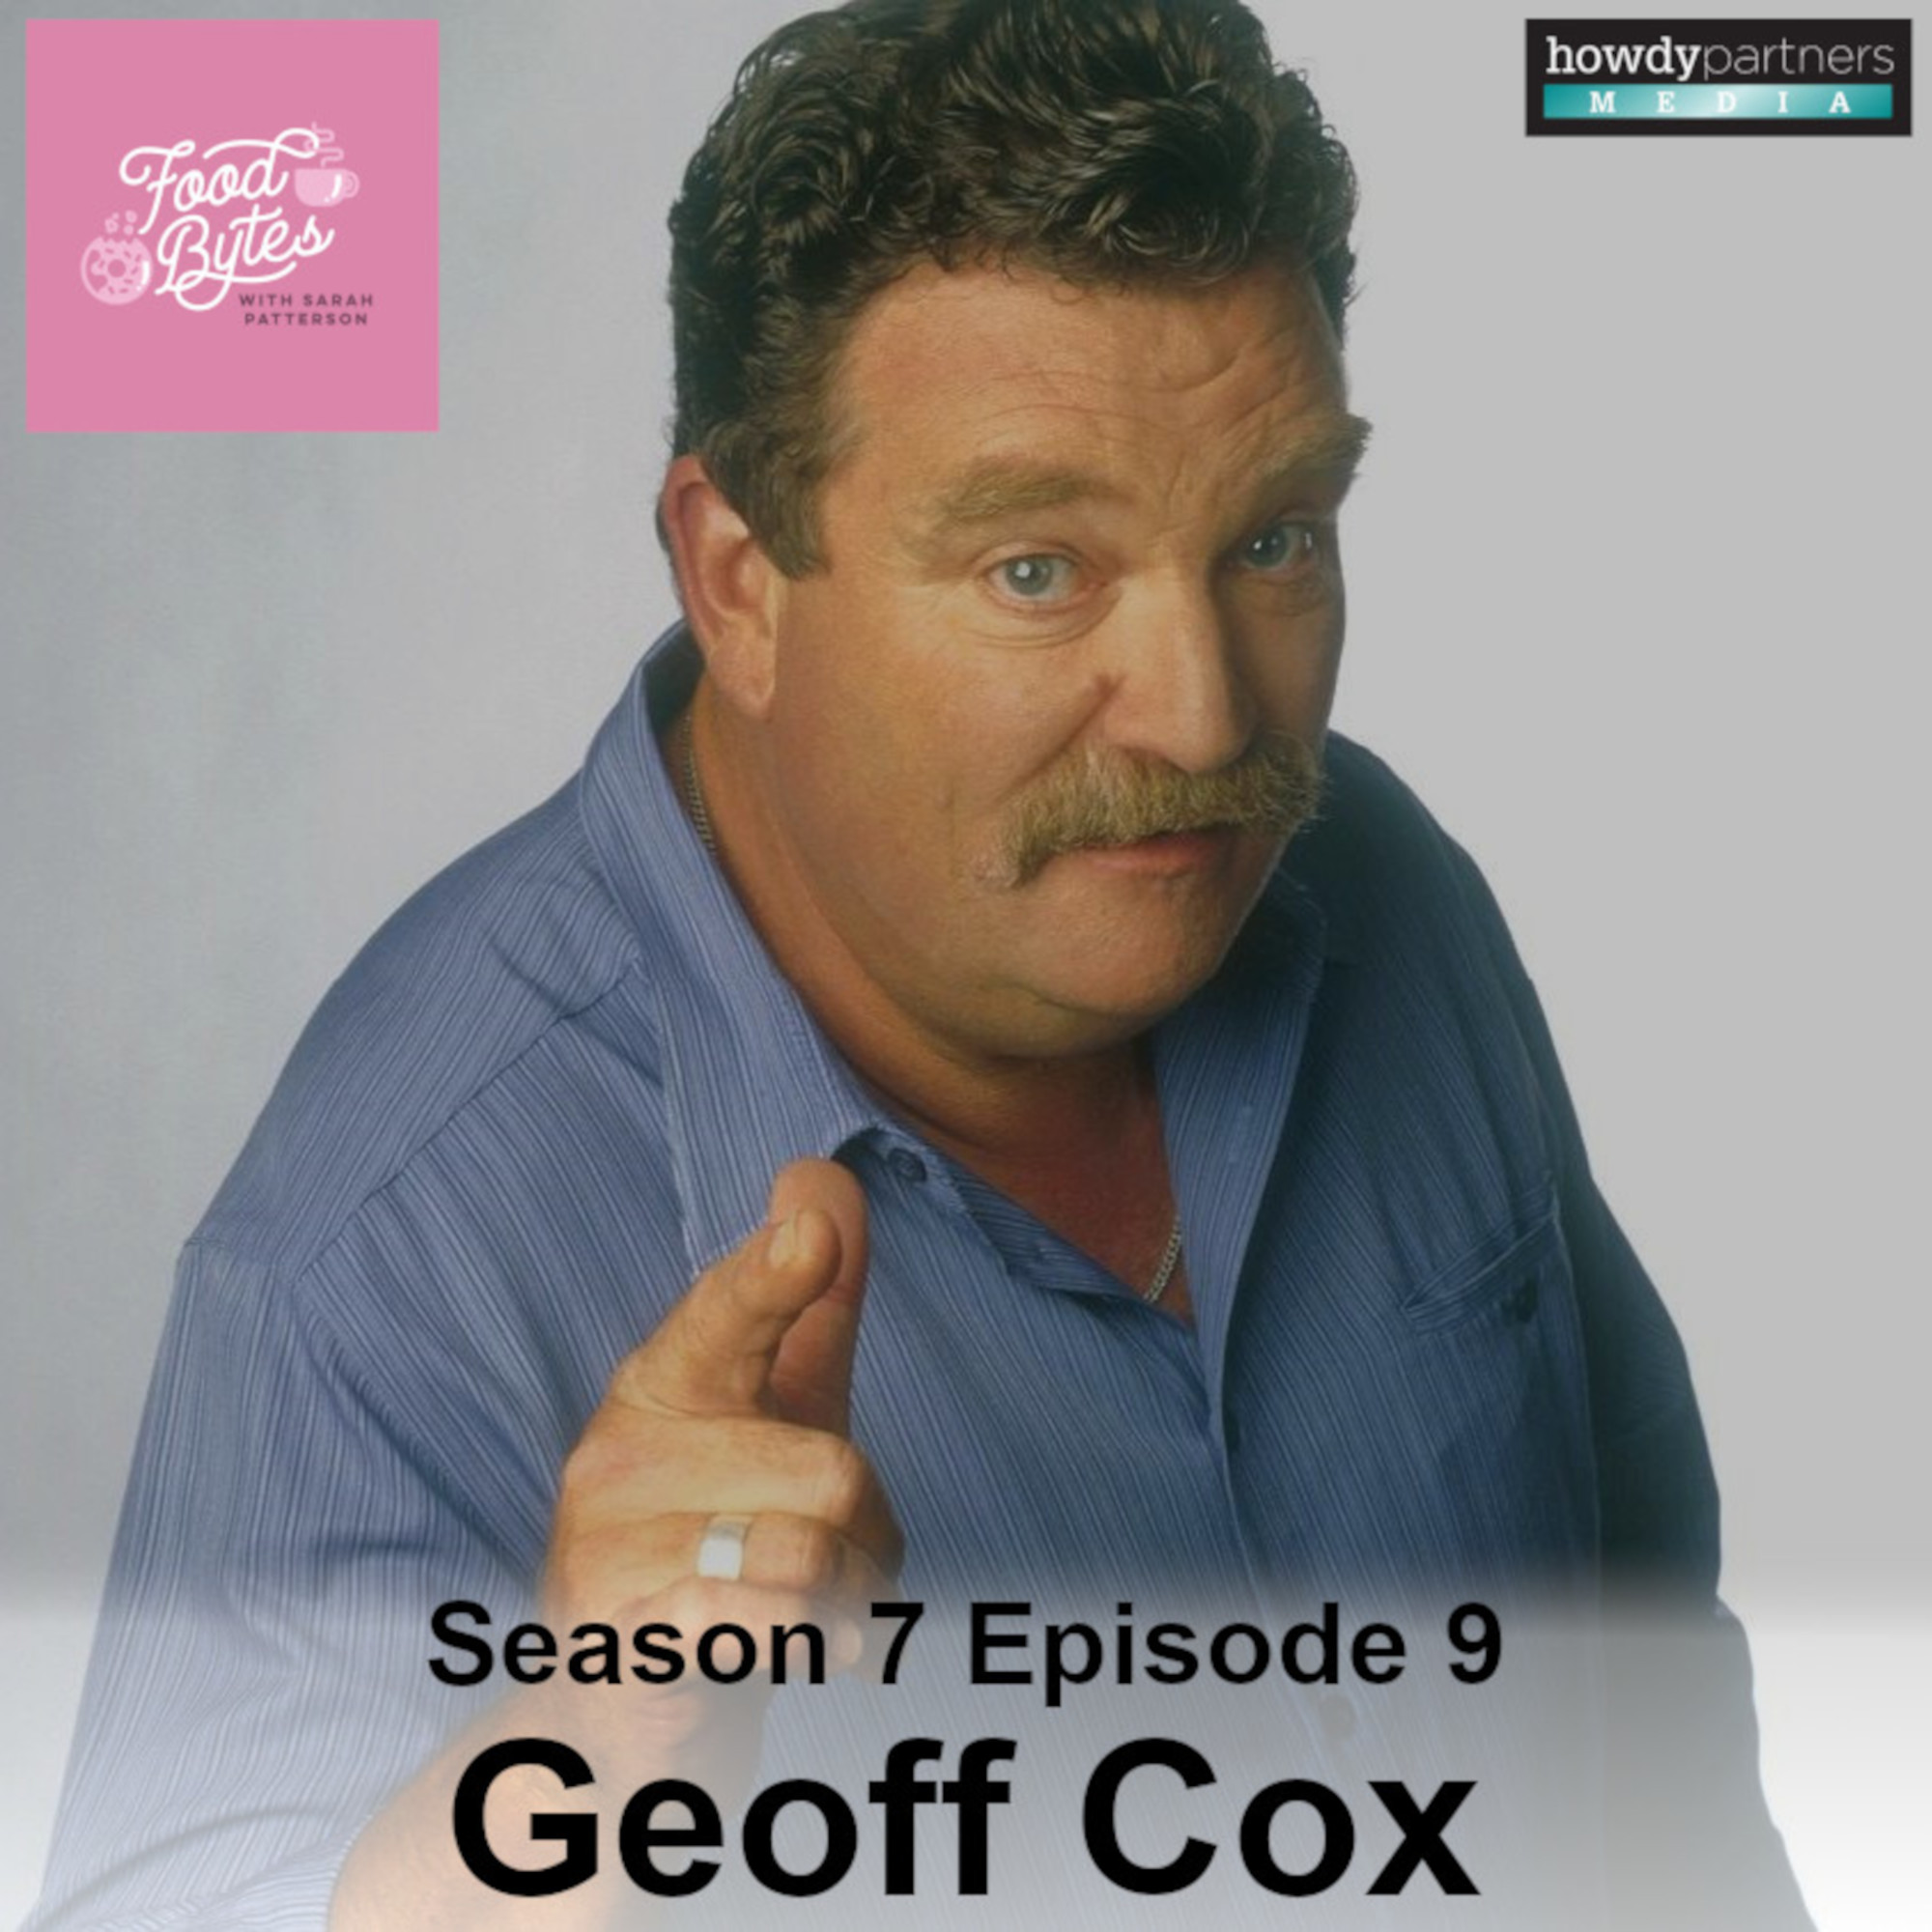 Geoff Cox